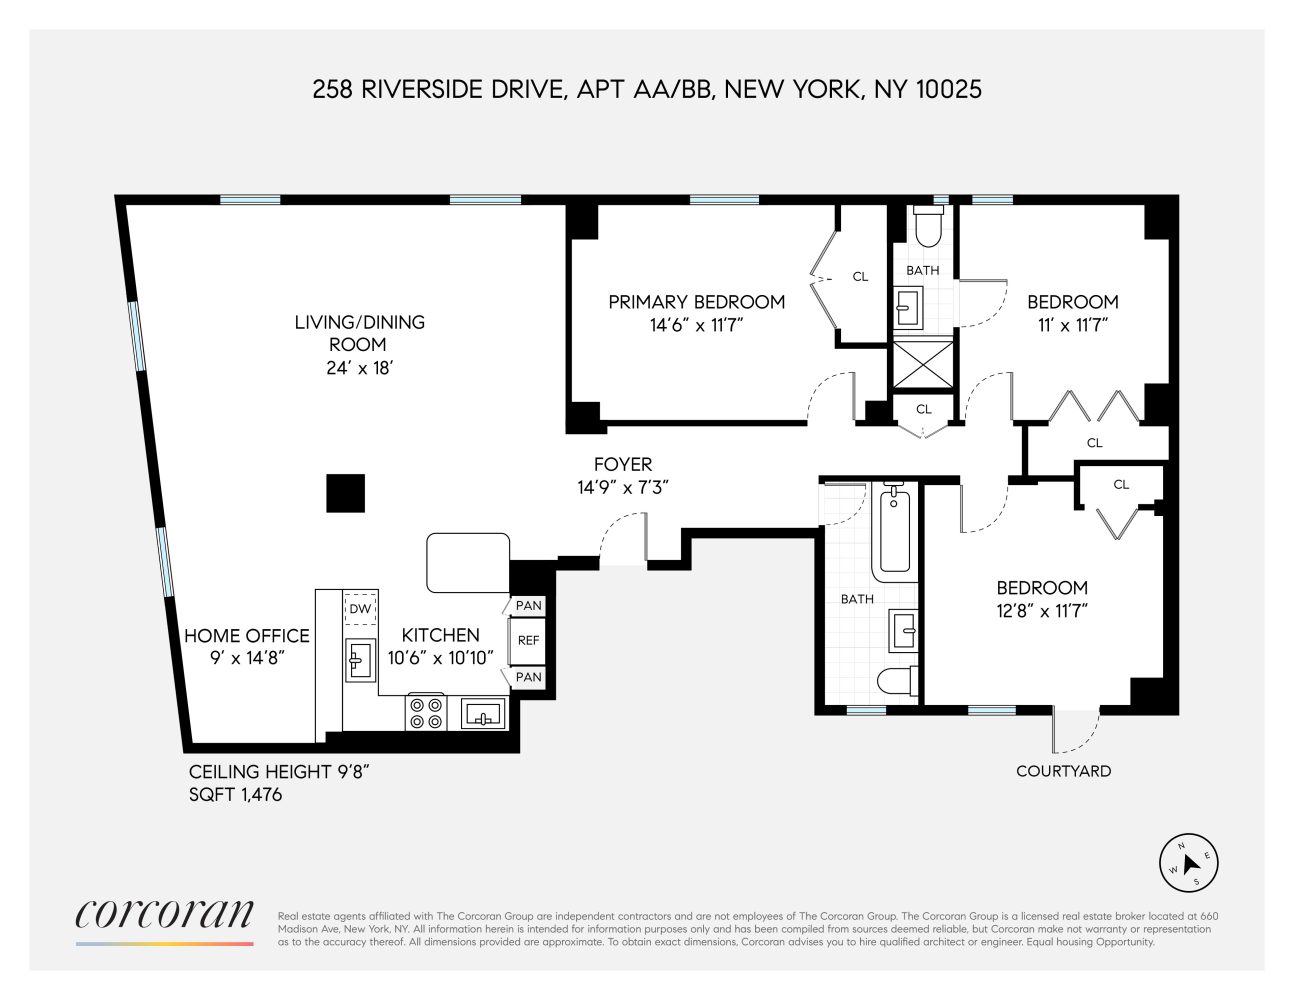 Floorplan for 258 Riverside Drive, AA/BB